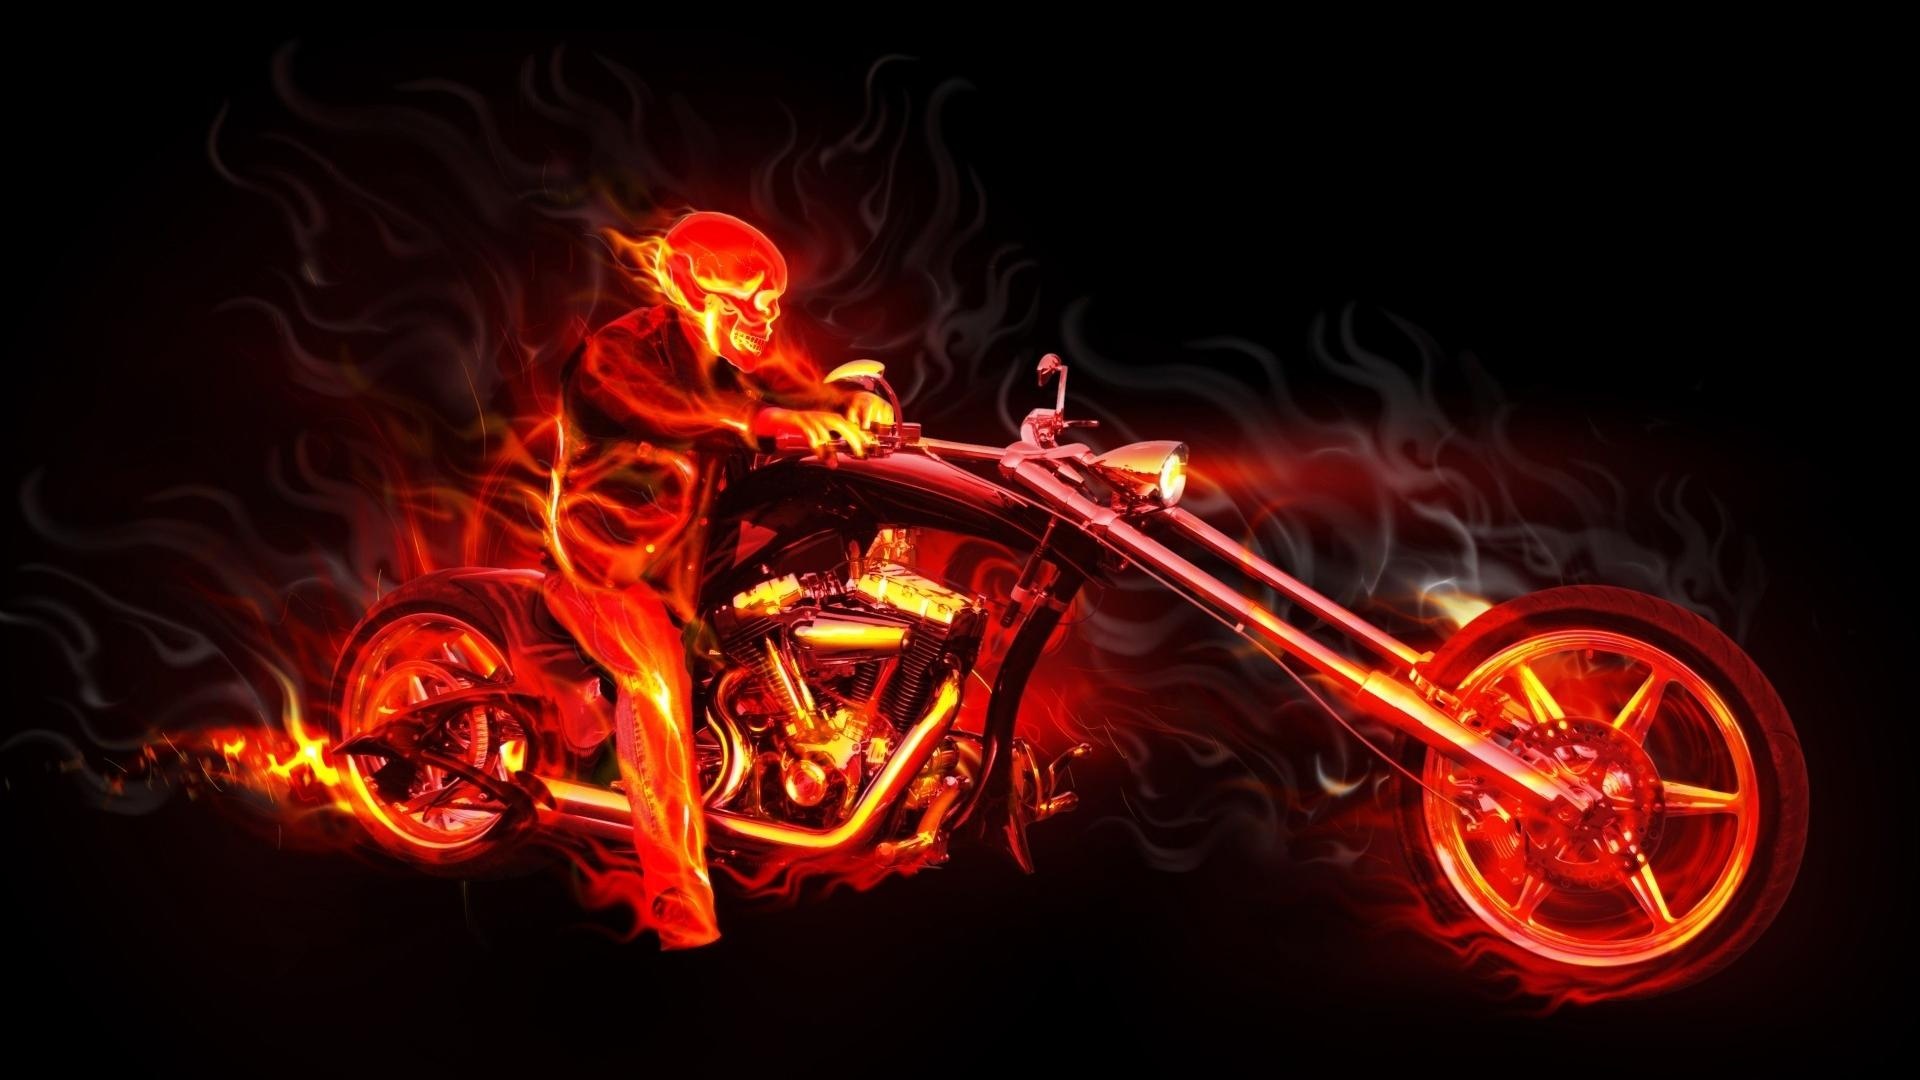 Motorcycle Flame Wallpaper 19202151080 123757 HD Wallpaper 1920x1080